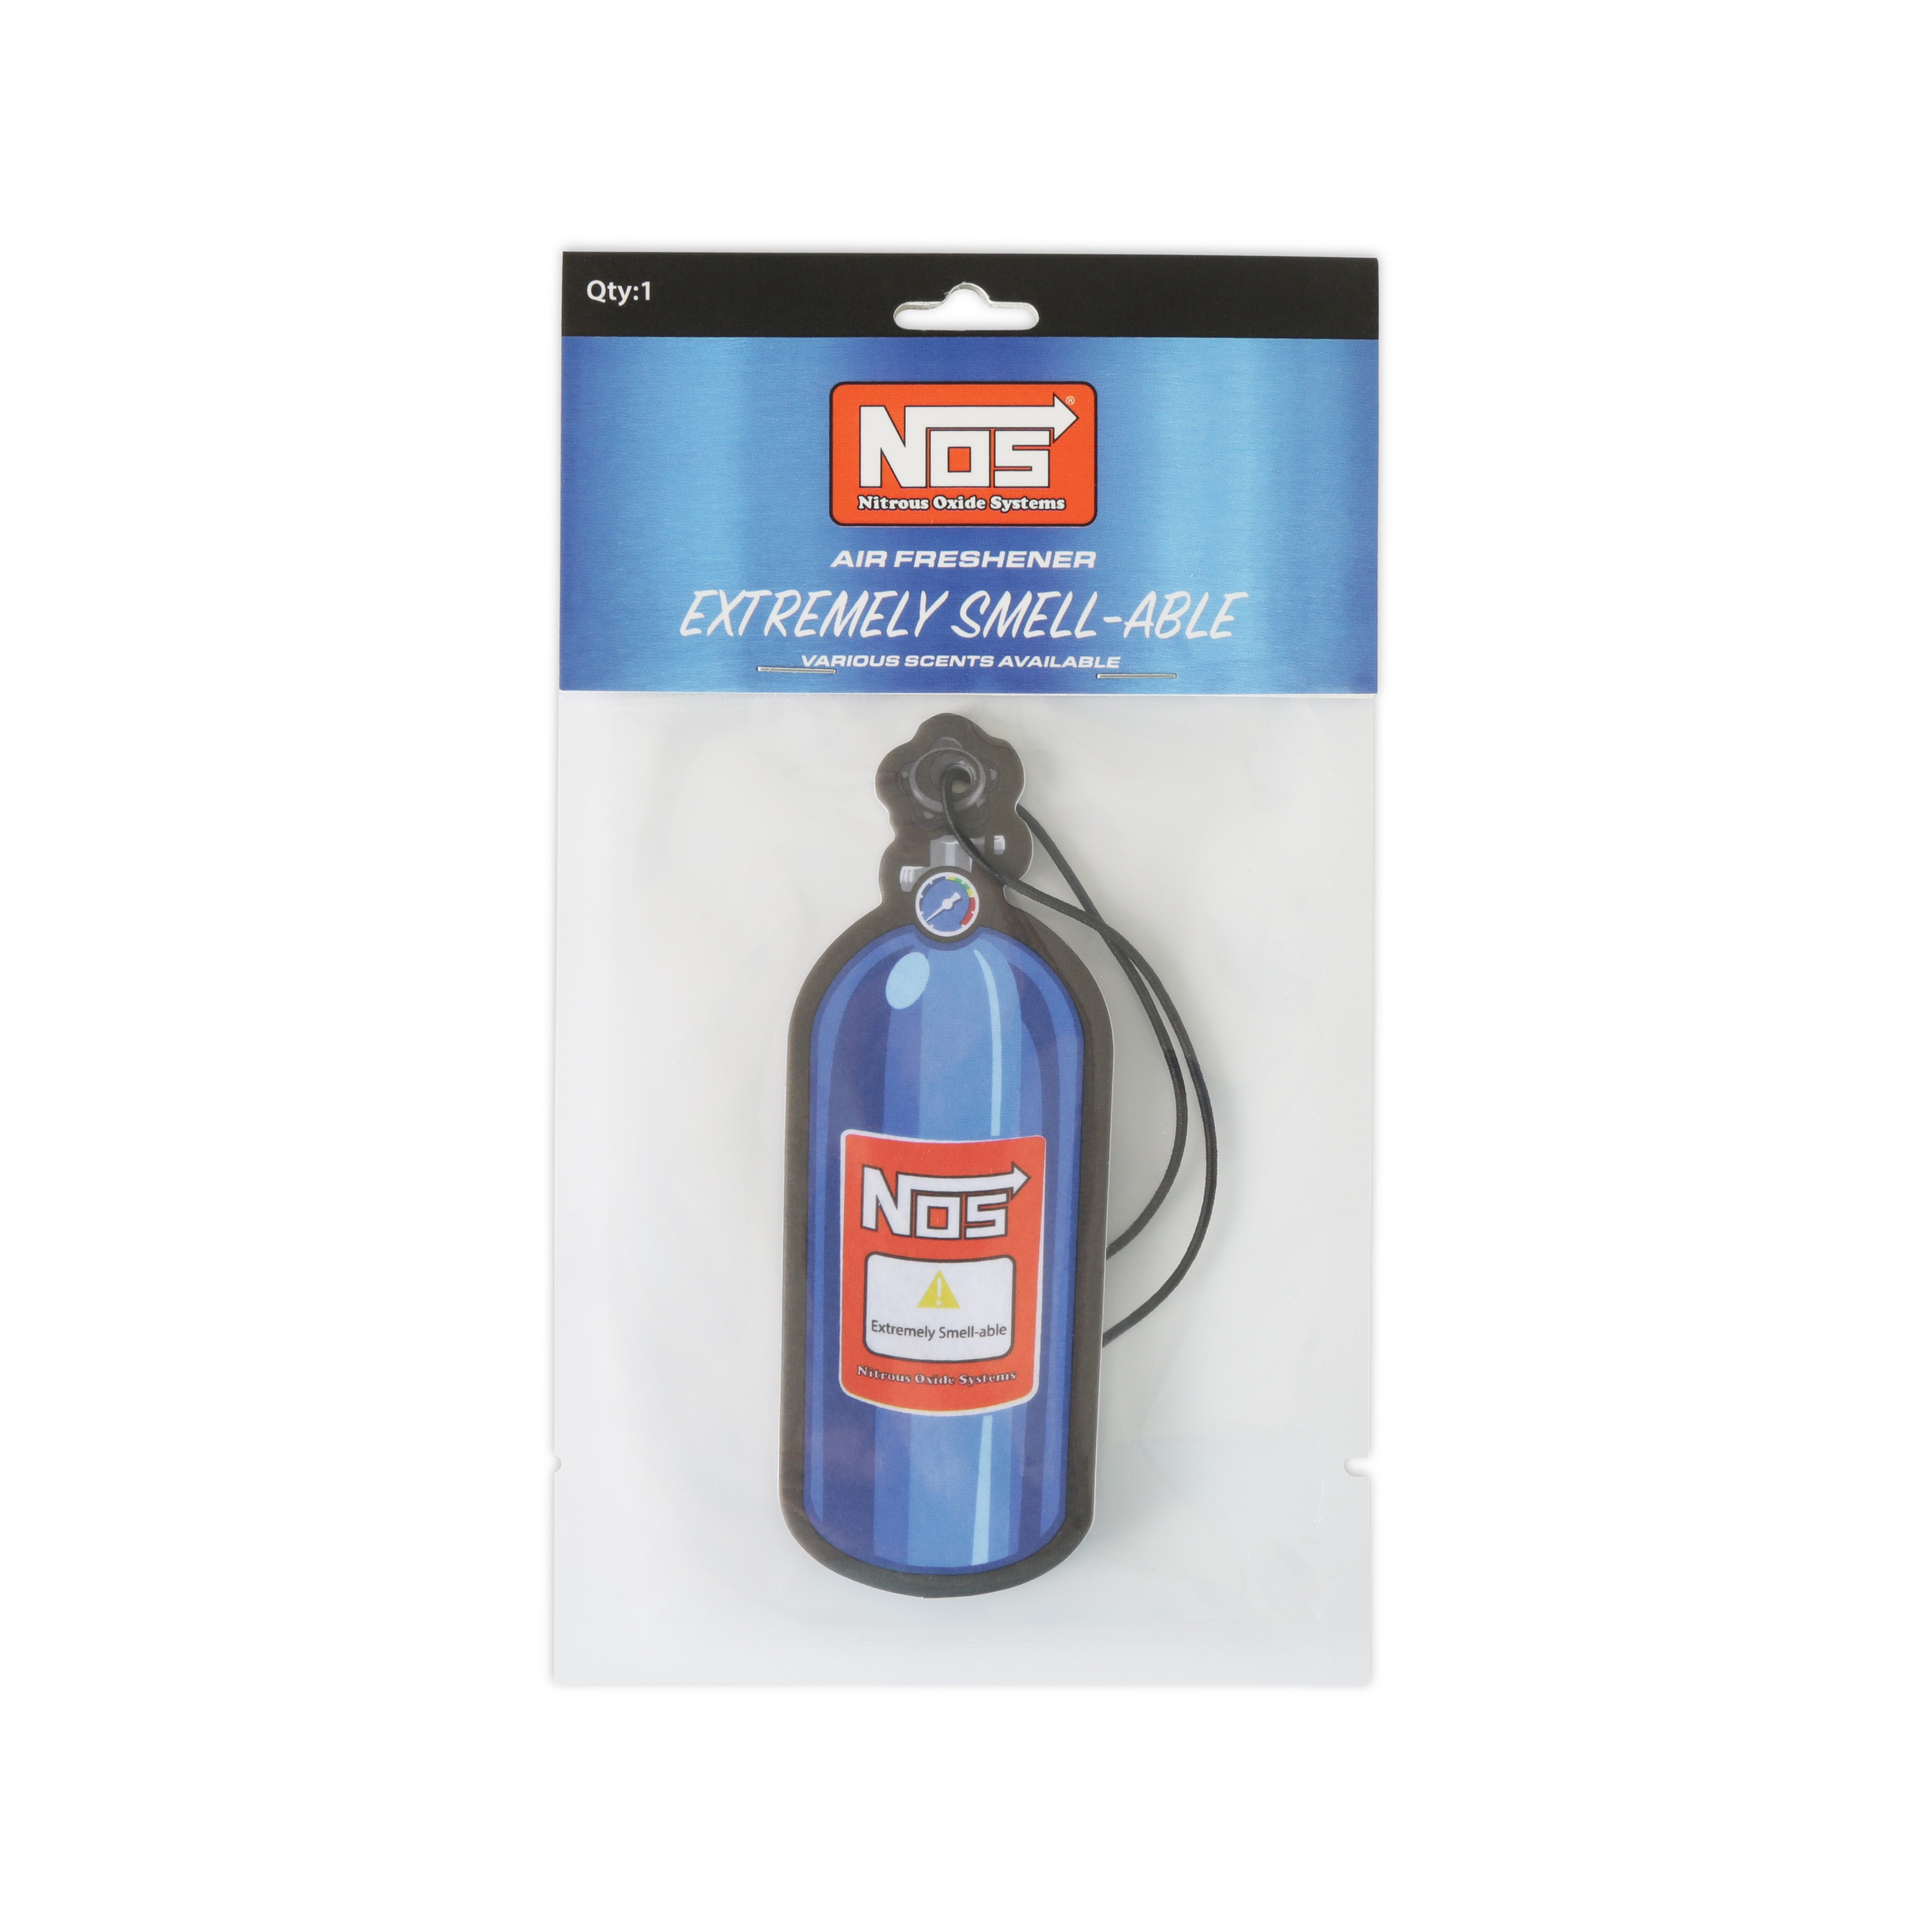 NOS/Nitrous Oxide System Air Freshener 36-544NC